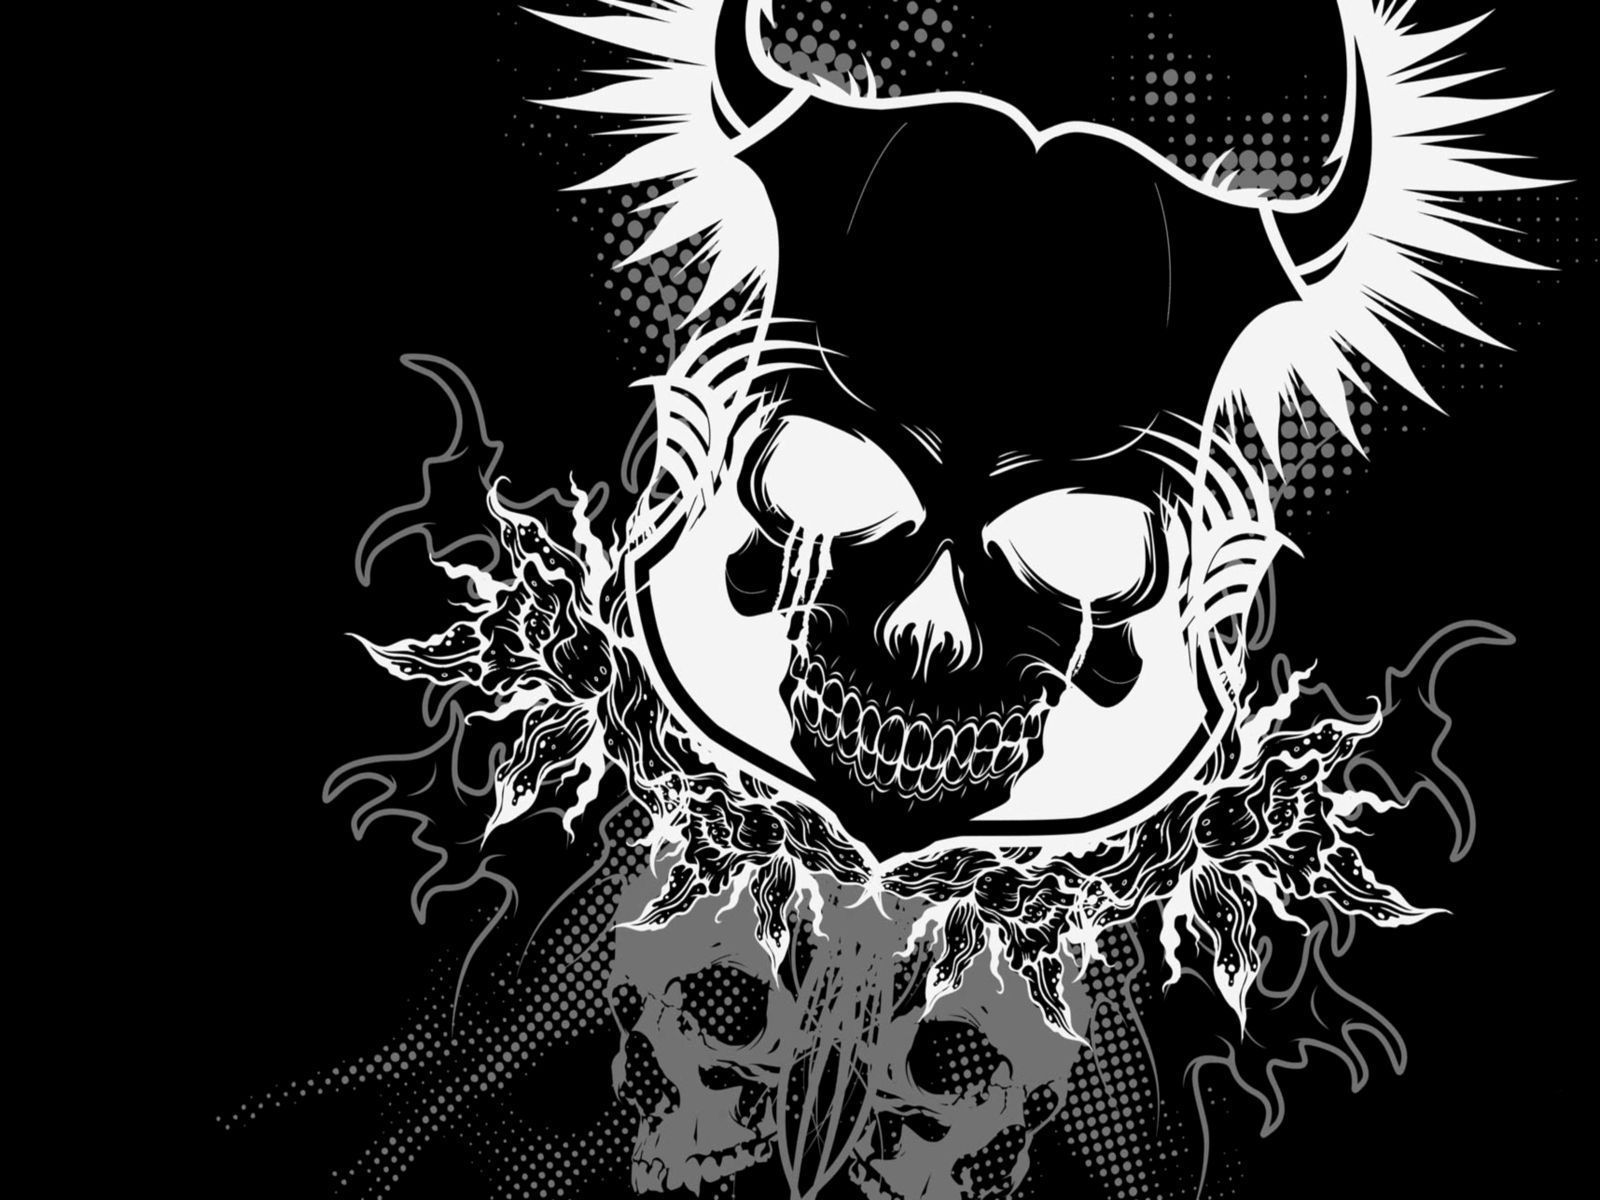 Awesome Skull Wallpapers - Top gratis fondos de calavera impresionante